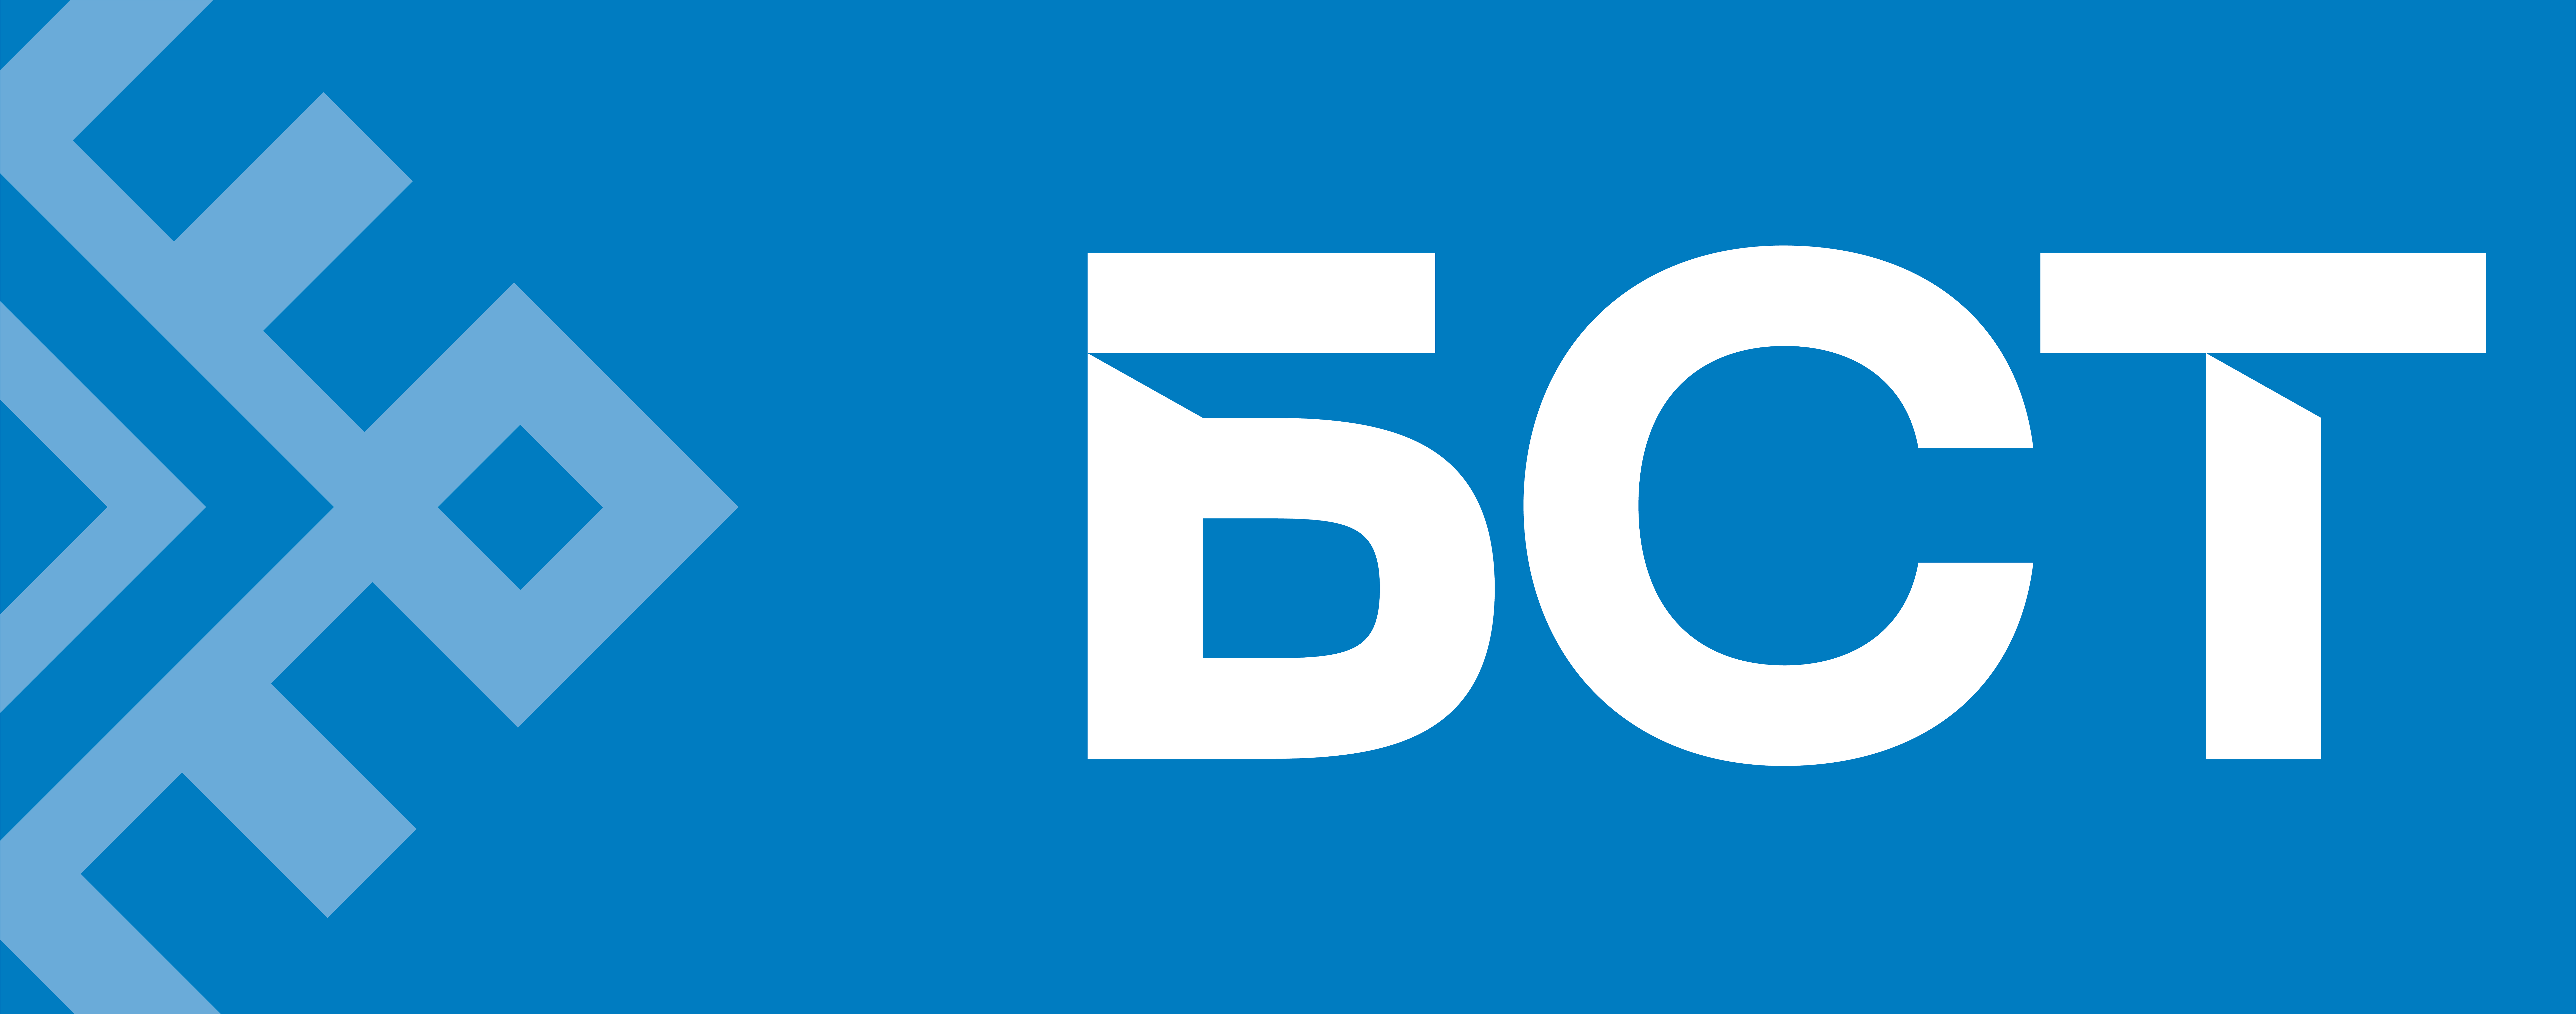 Телеканал БСТ логотип. БСТ Башкирское спутниковое Телевидение logo 2008. Логотип БСТ Уфа. БСТ логотип 2020. Эфир телеканала бст